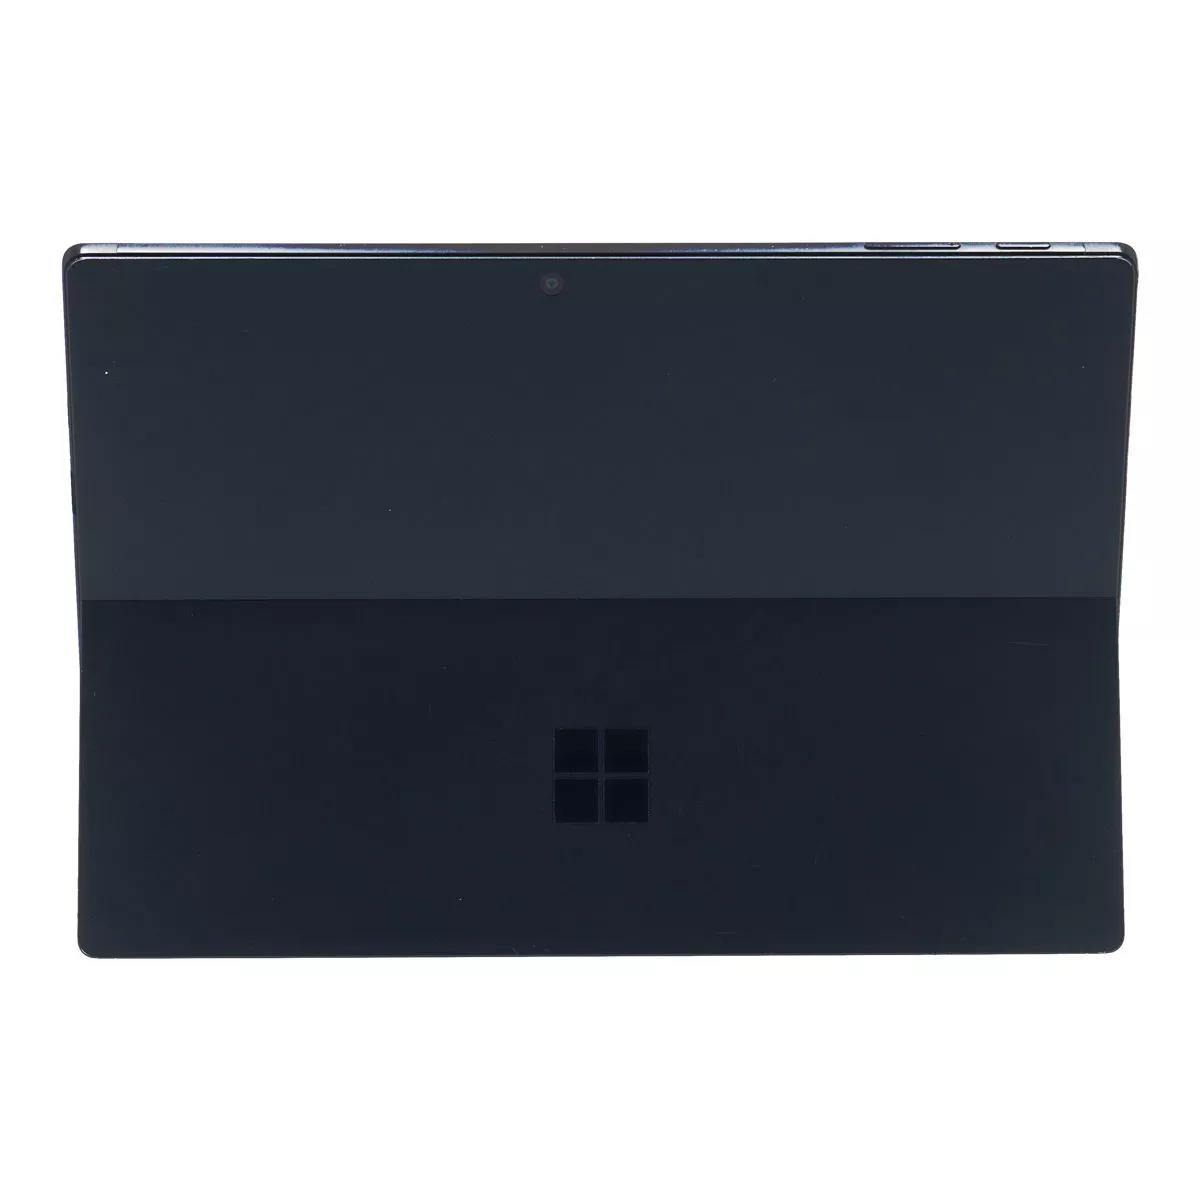 Microsoft Surface Pro 7 Core i5 1035G4 8 GB 240 GB SSD Webcam Black A